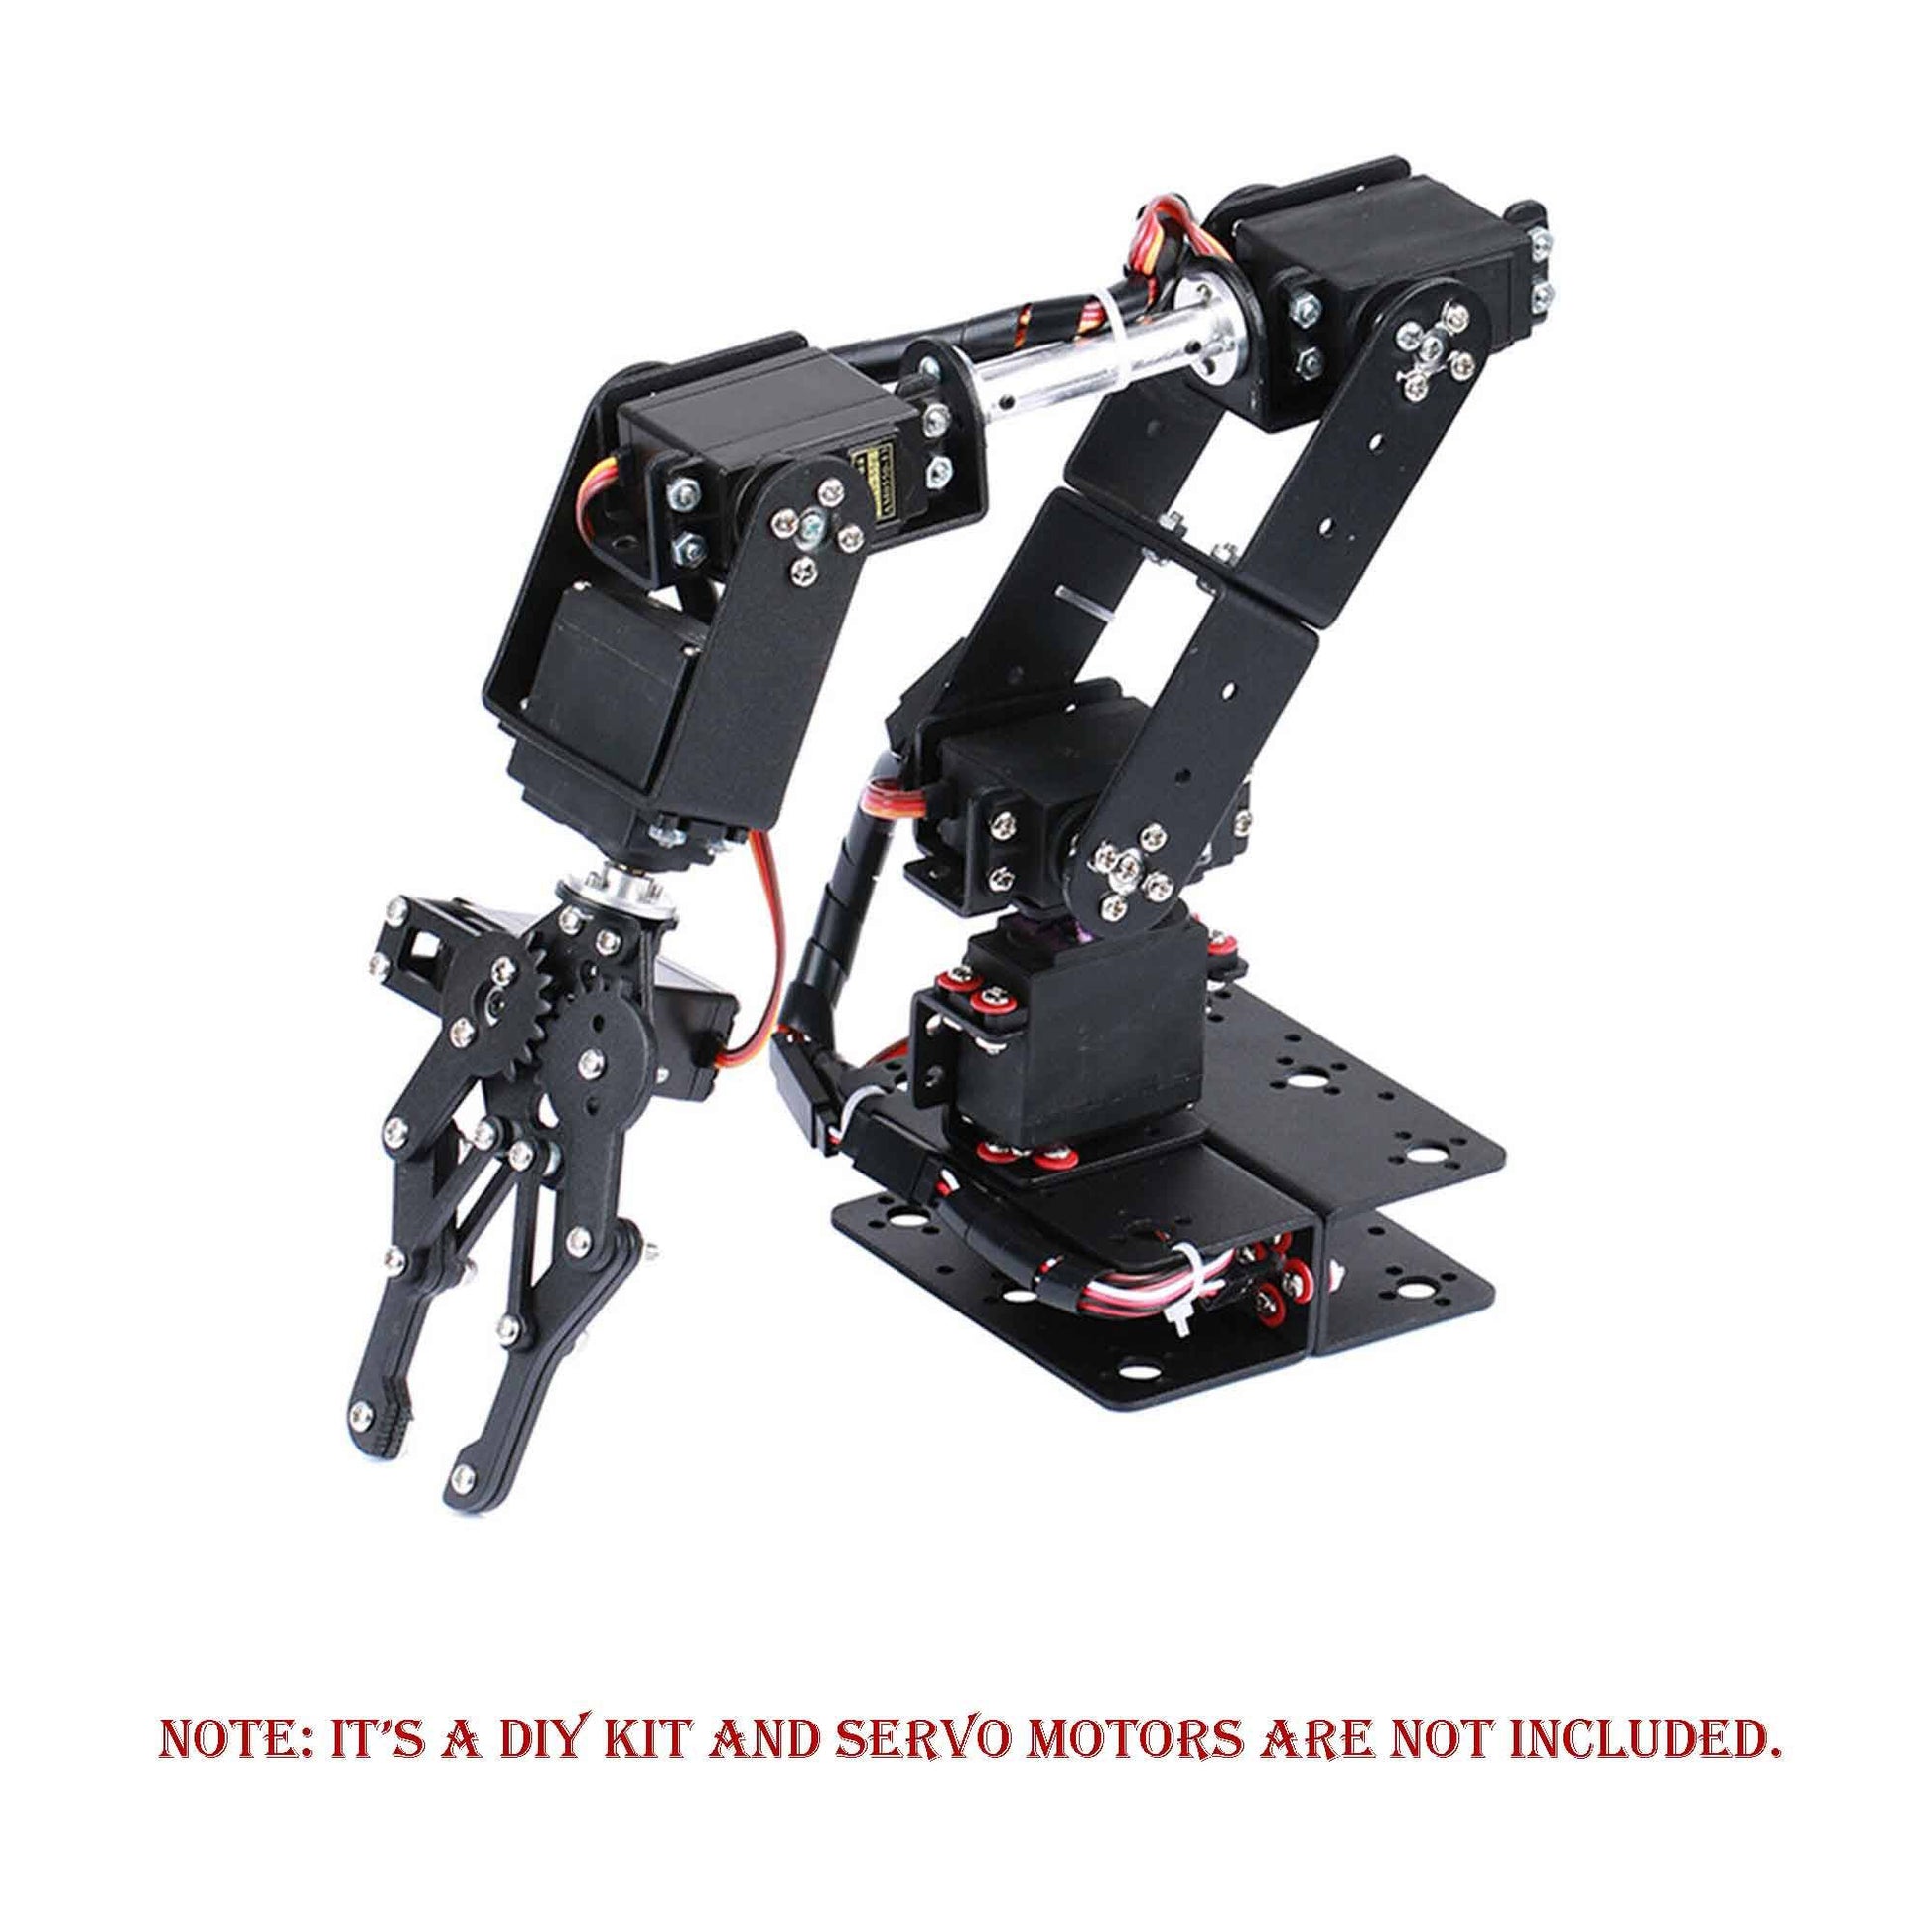 DIY Robot ARM Kit 6 DOF Without Servo Motor